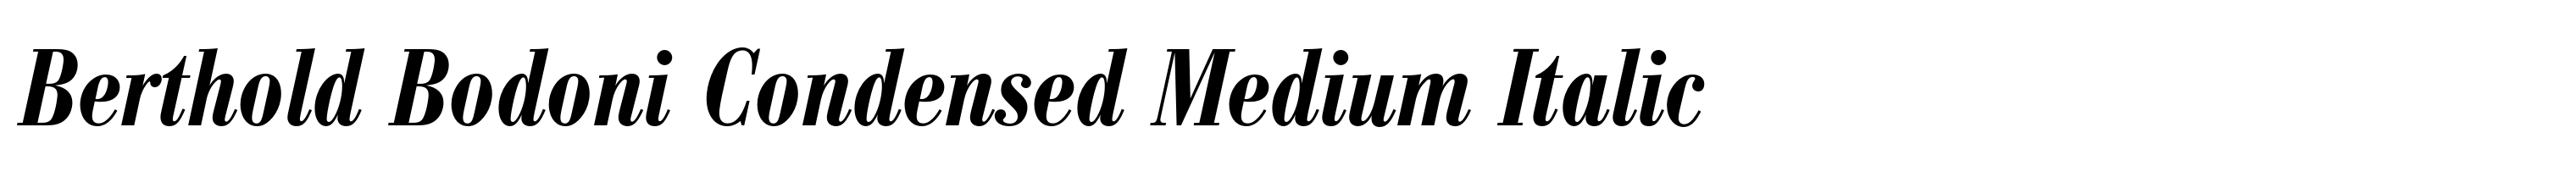 Berthold Bodoni Condensed Medium Italic